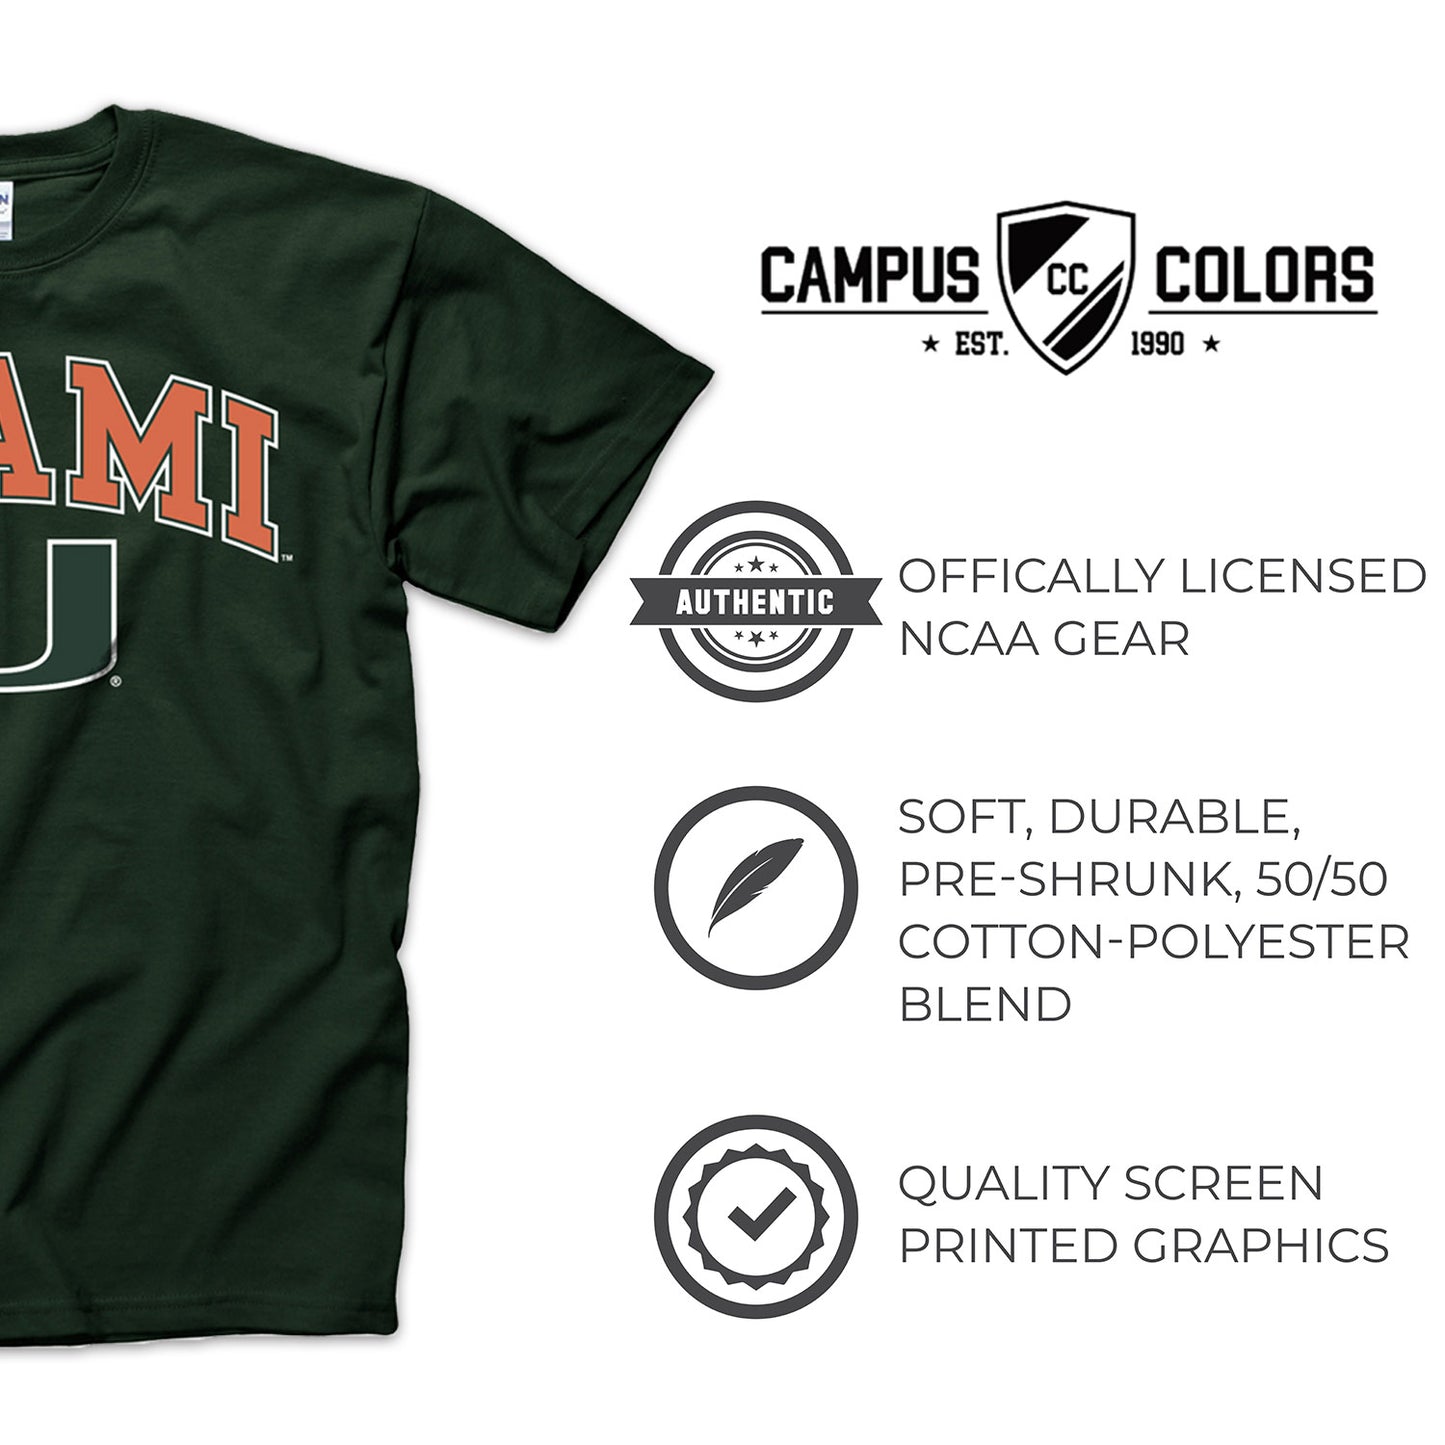 Miami Hurricanes NCAA Adult Gameday Cotton T-Shirt - Green